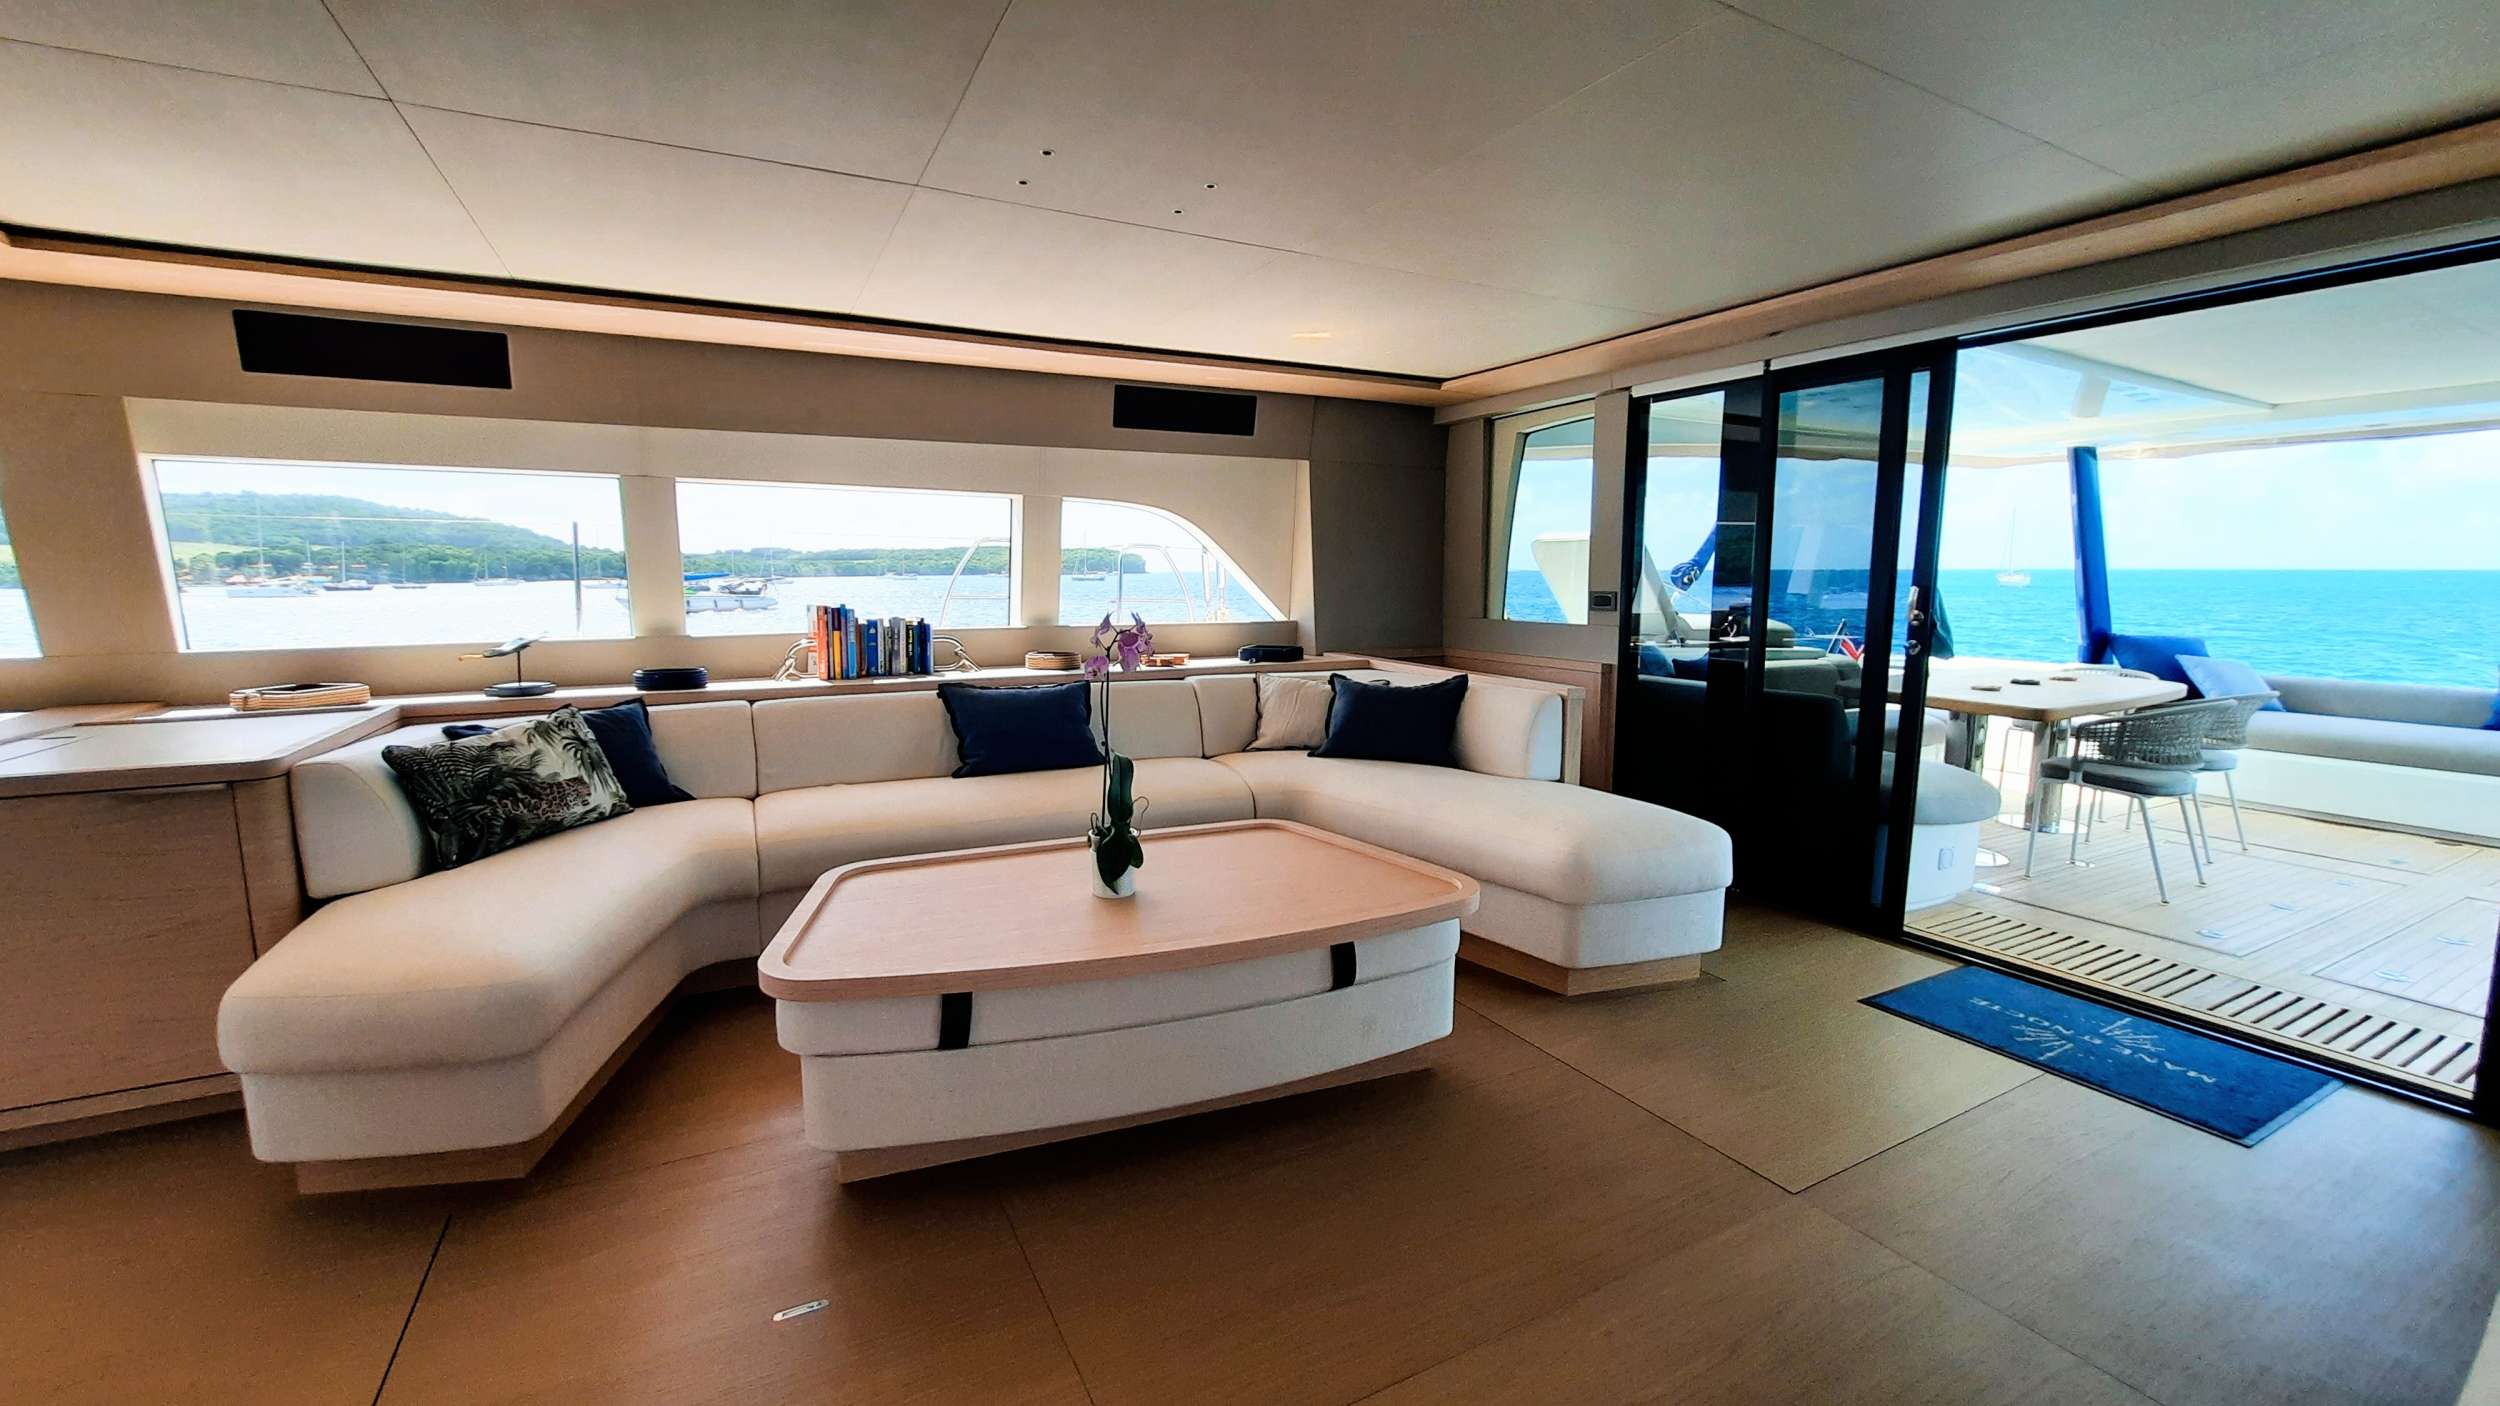 MANE et NOCTE - Luxury yacht charter Maldives & Boat hire in Indian Ocean & SE Asia 2